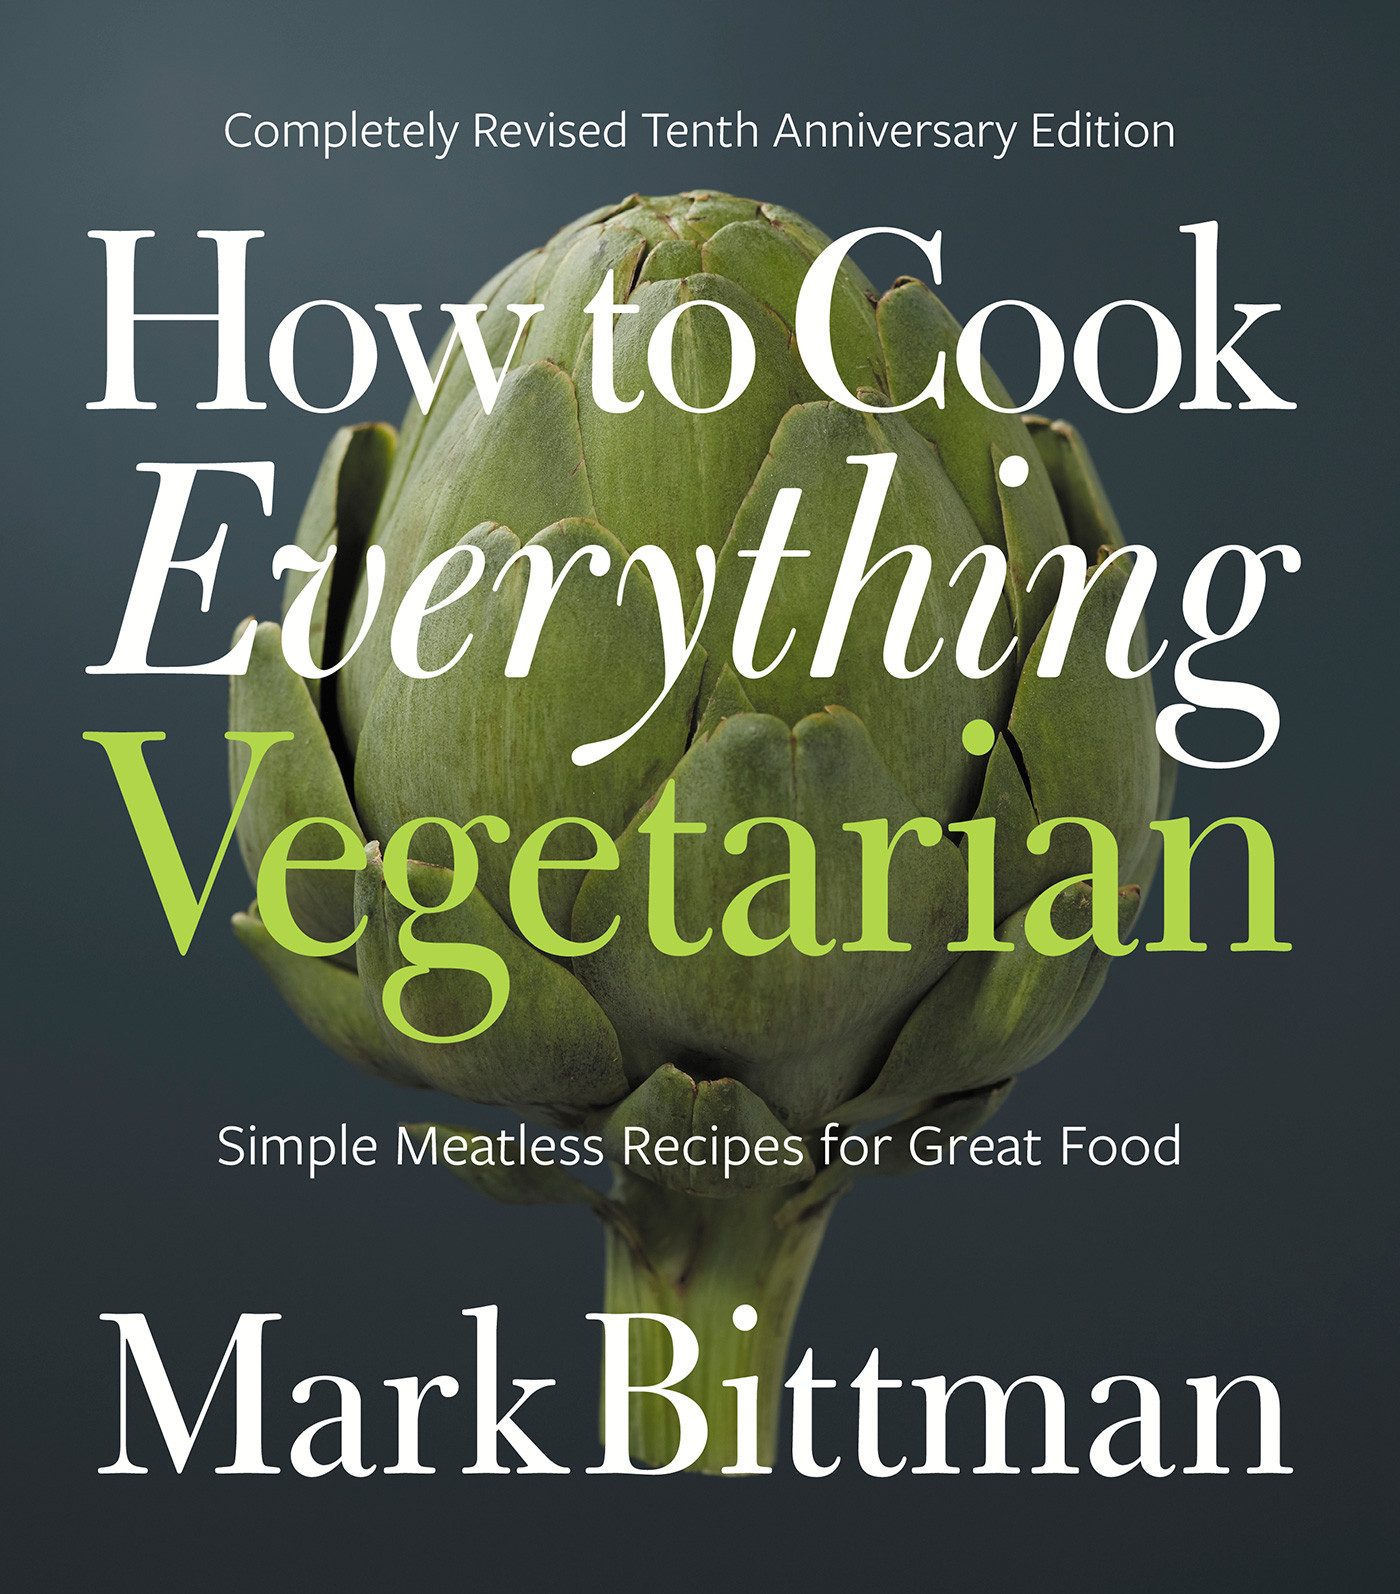 Mark Bittman Vegetarian Recipes
 Meatless Monday mark bittman Archives Meatless Monday